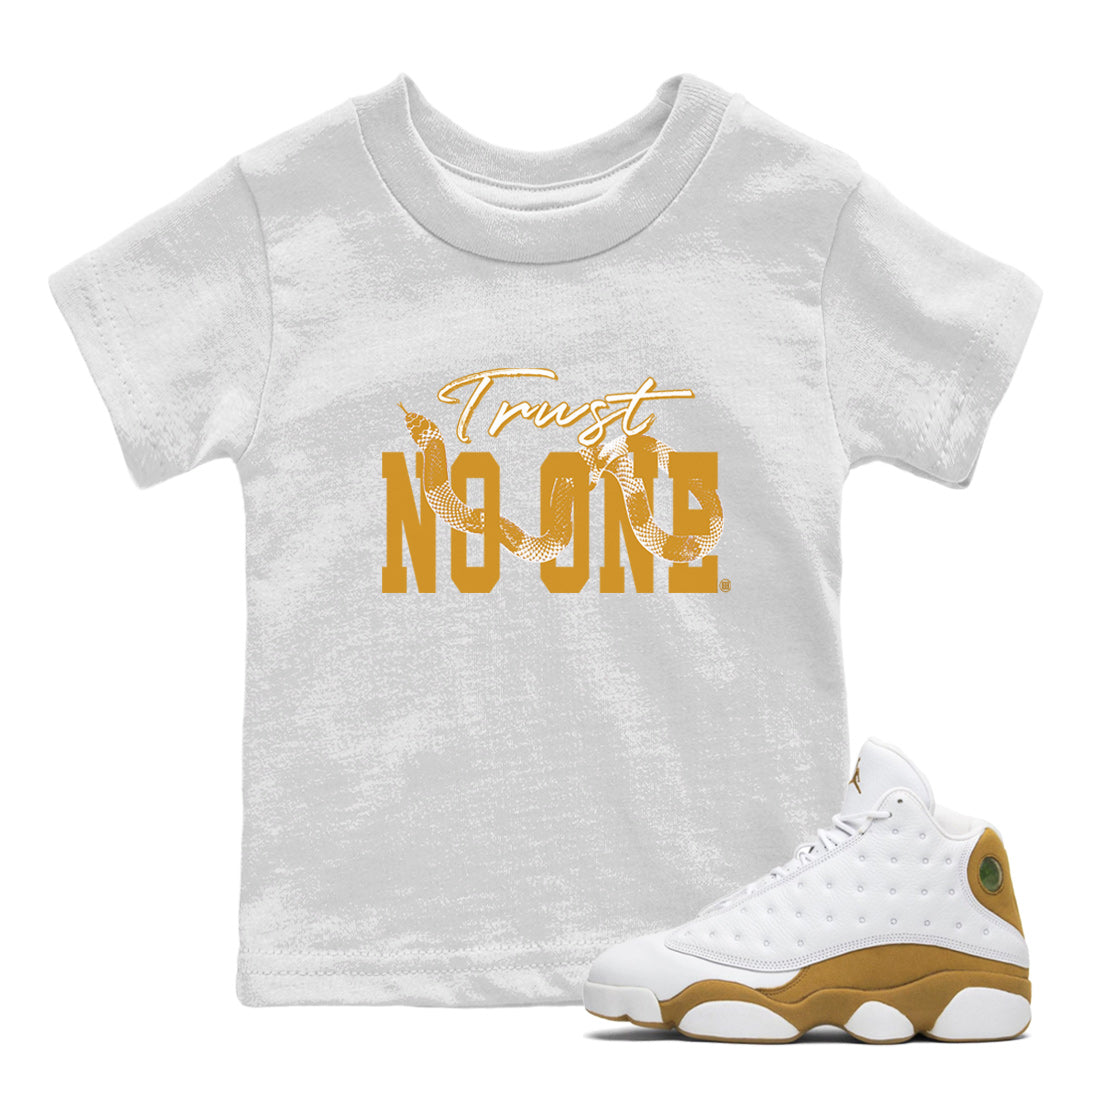 Jordan Retro 13 Wheat Sneaker Matching Tee Trust No One Sneaker Tees 13 Wheat Sneaker T-Shirt Kids Shirts White 1